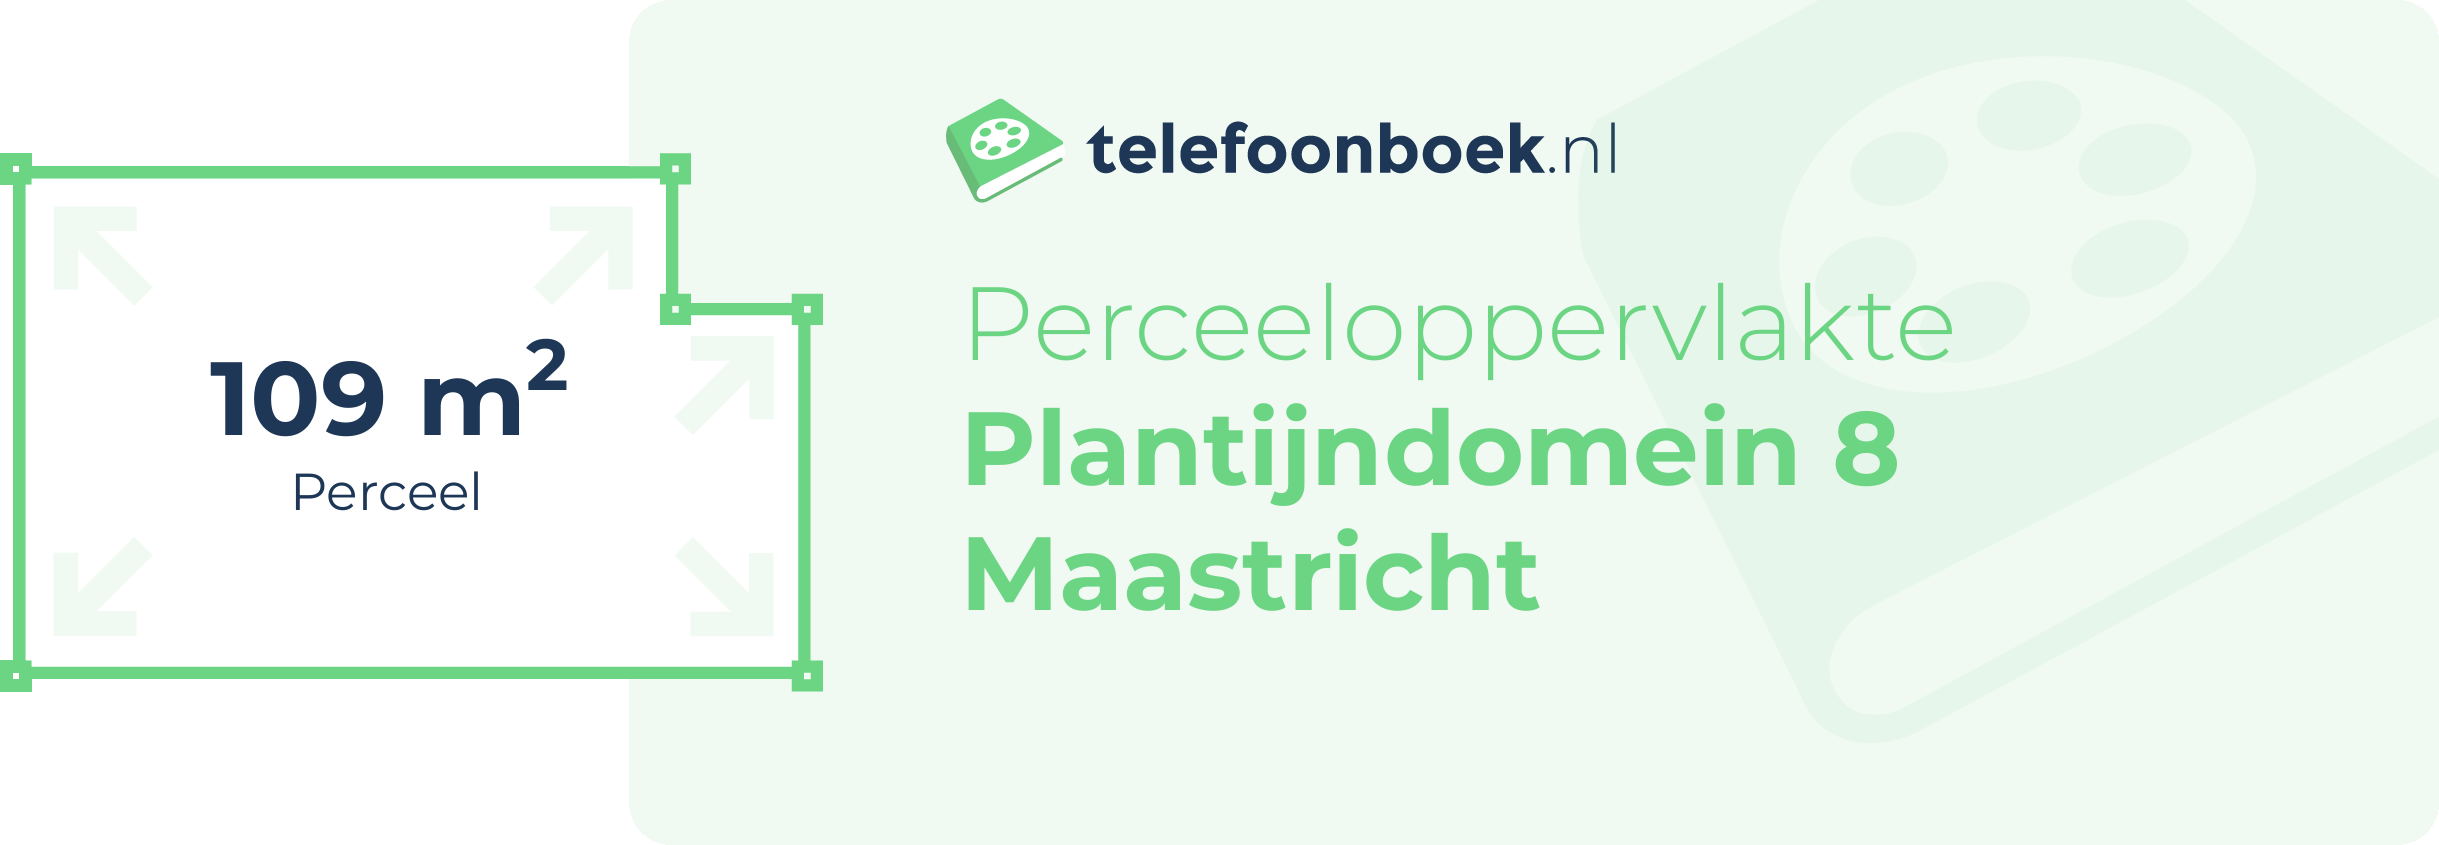 Perceeloppervlakte Plantijndomein 8 Maastricht